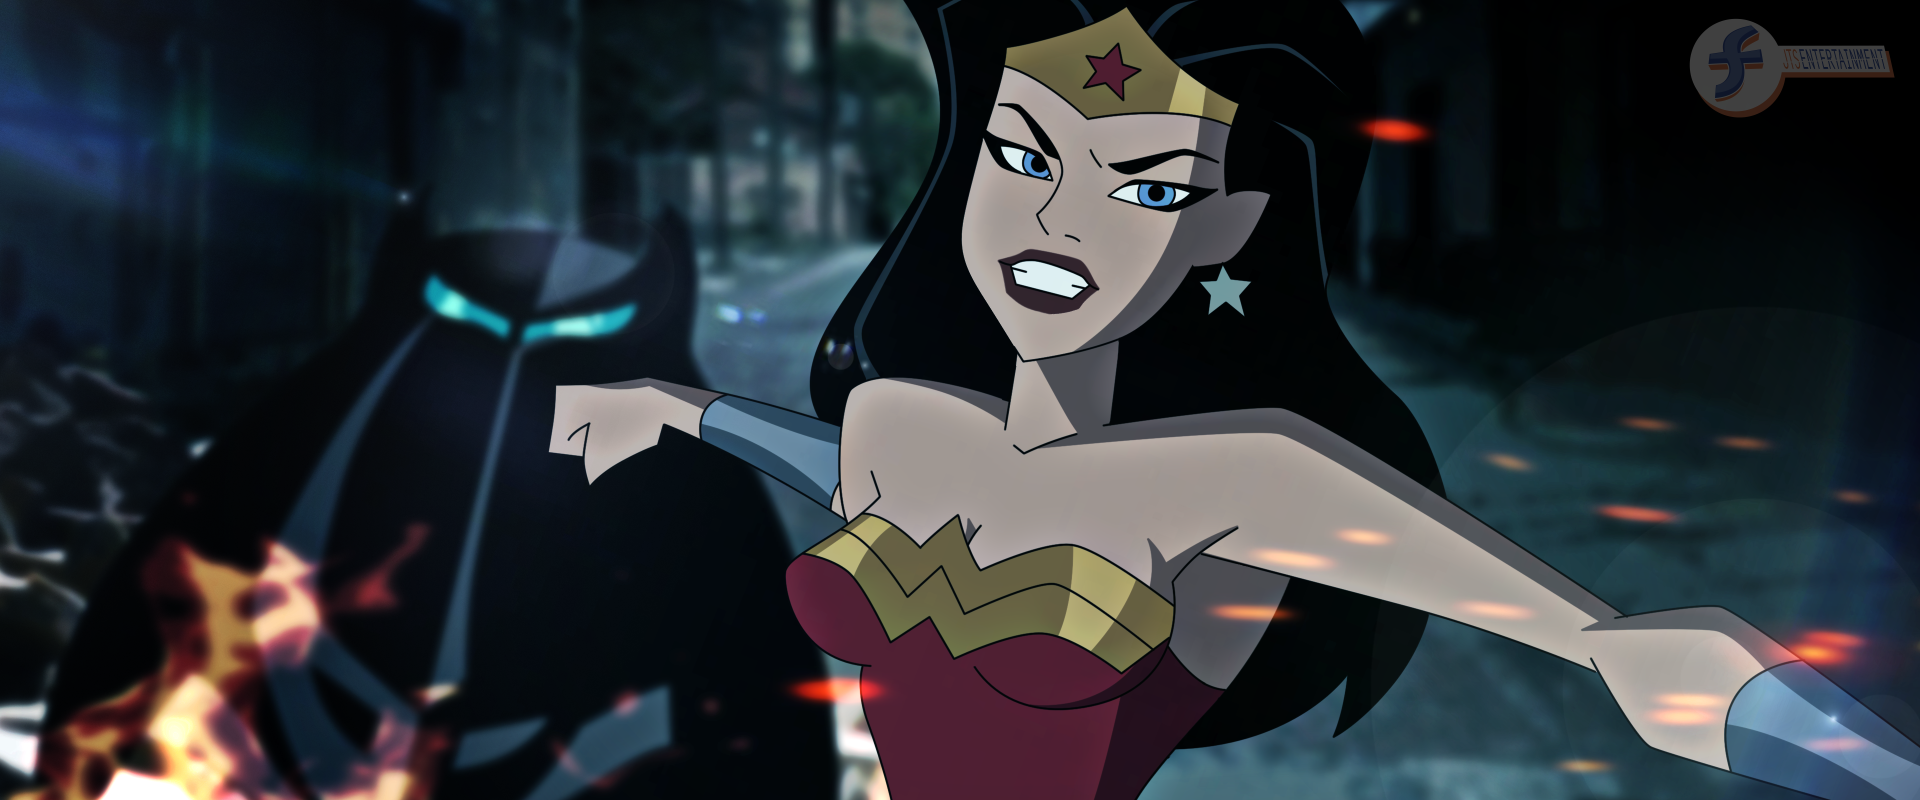 Batman v Superman DCAU - Wonder Woman by JTSEntertainment on DeviantArt